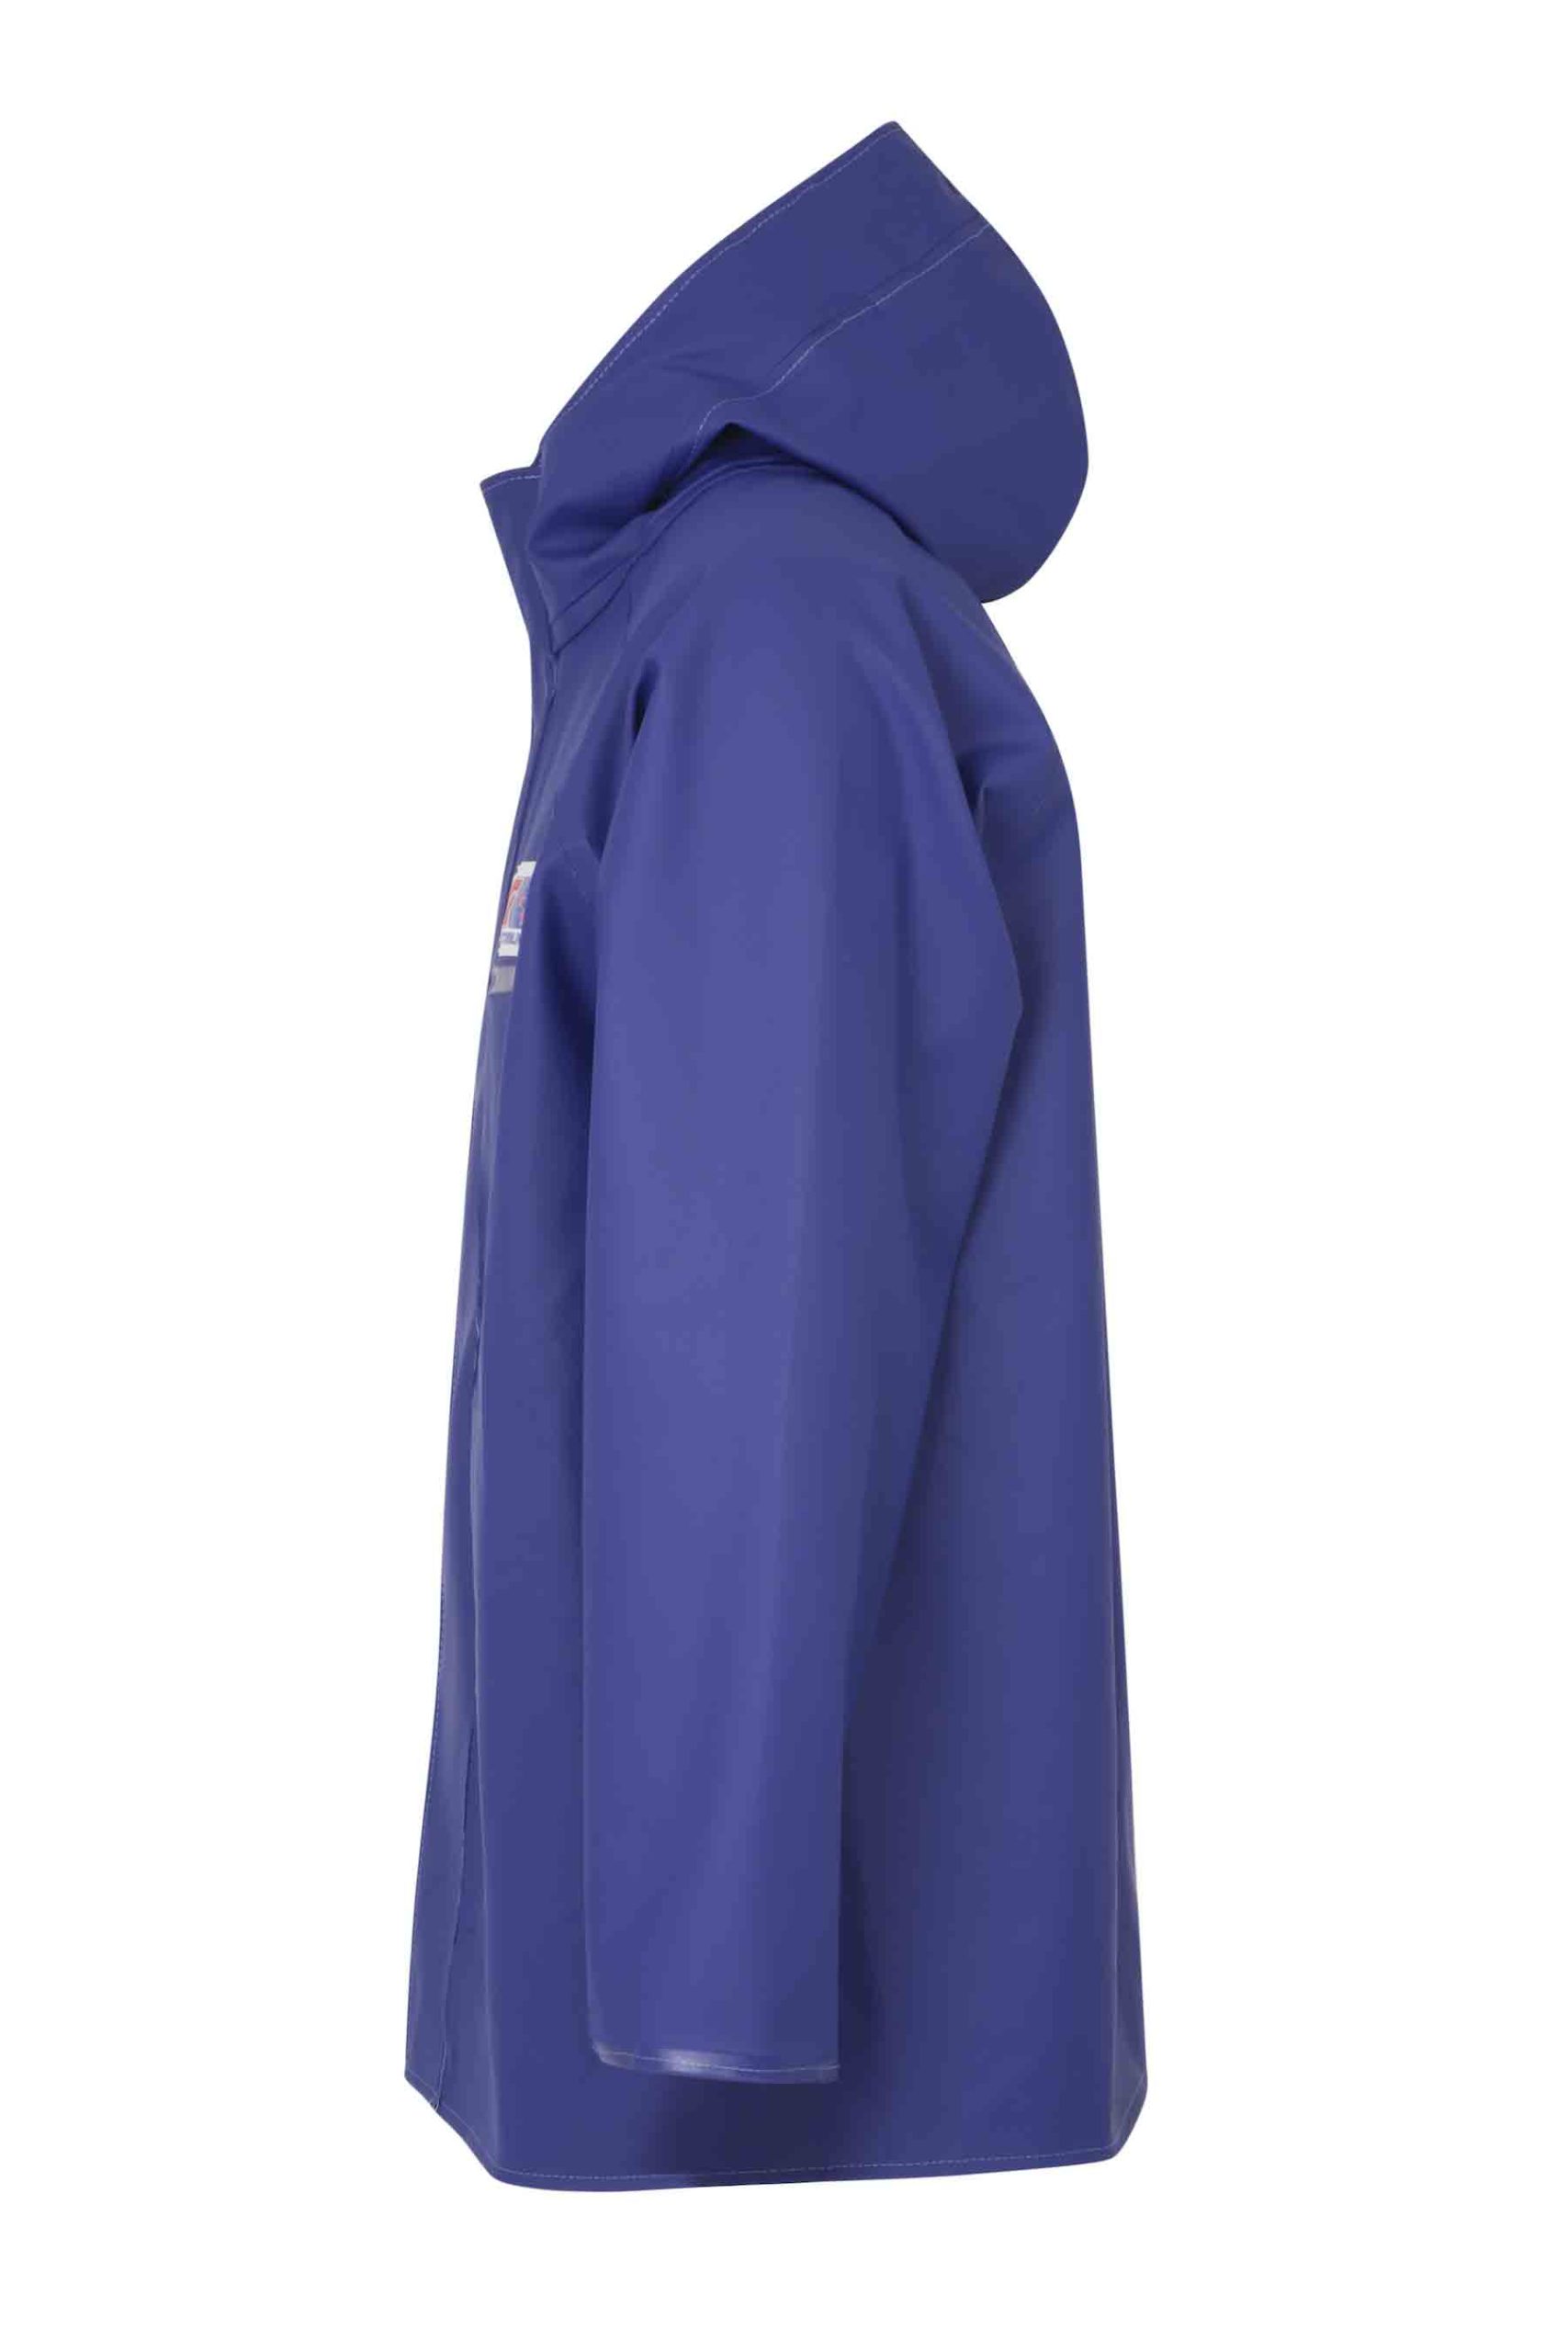 Stormtex 248B Midweight PVC Waterproof Workwear Jacket (Size: XL)